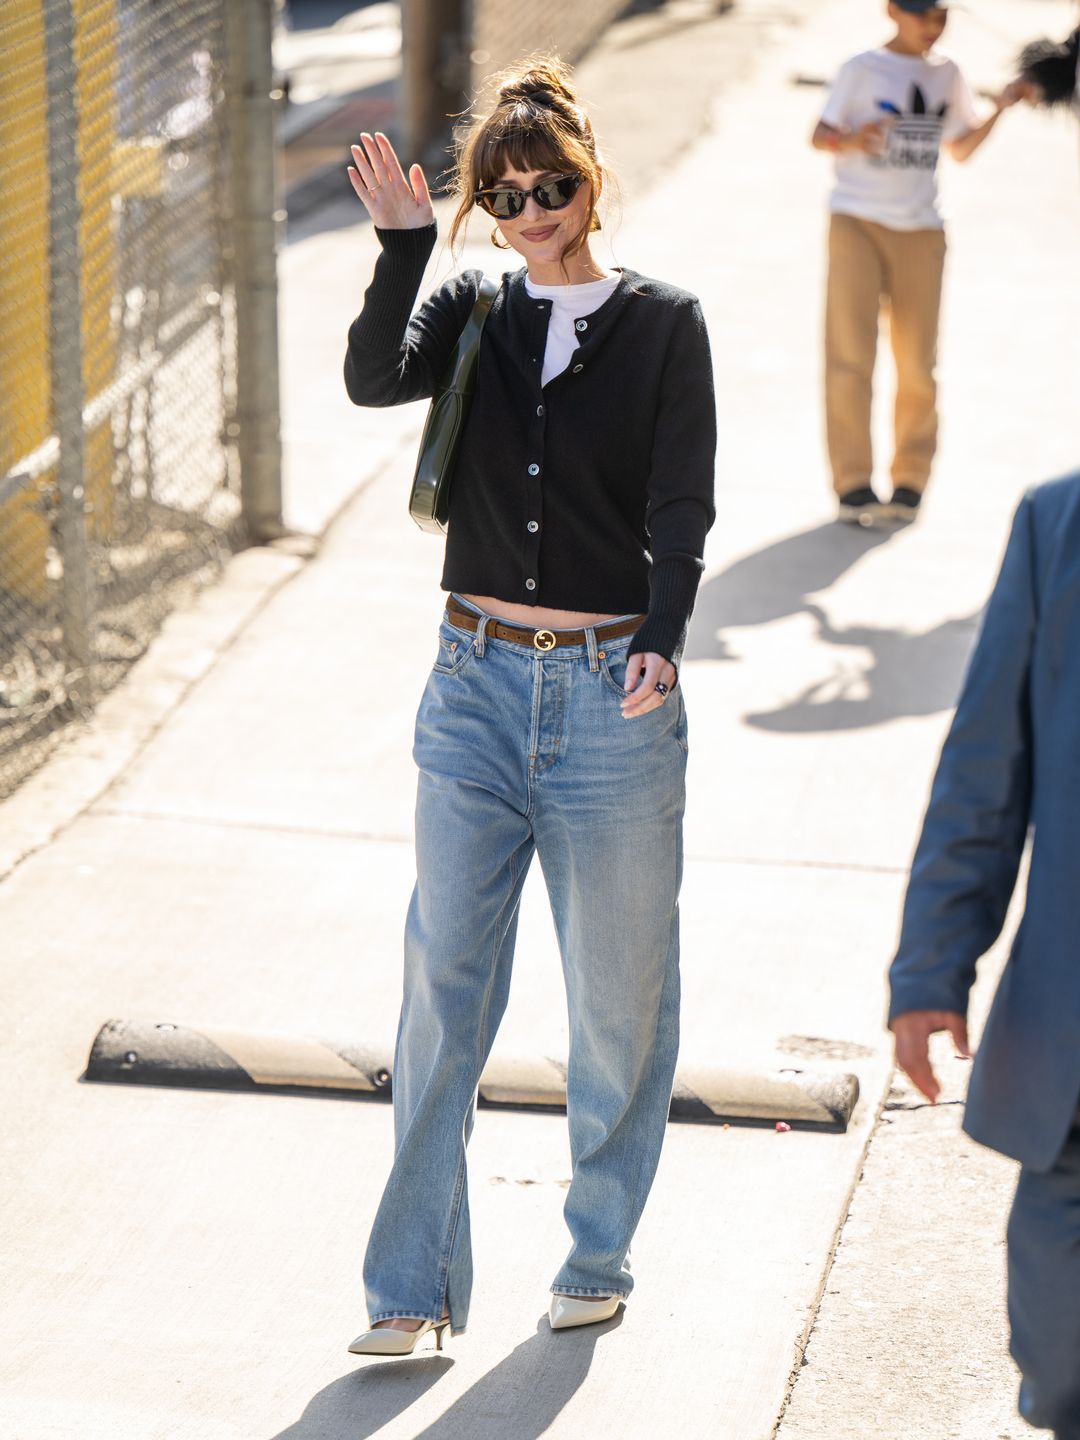 Dakota Johnson is seen at "Jimmy Kimmel Live!" on June 19, 2024 in Los Angeles, California wearing jeans, a black cardigan and heels